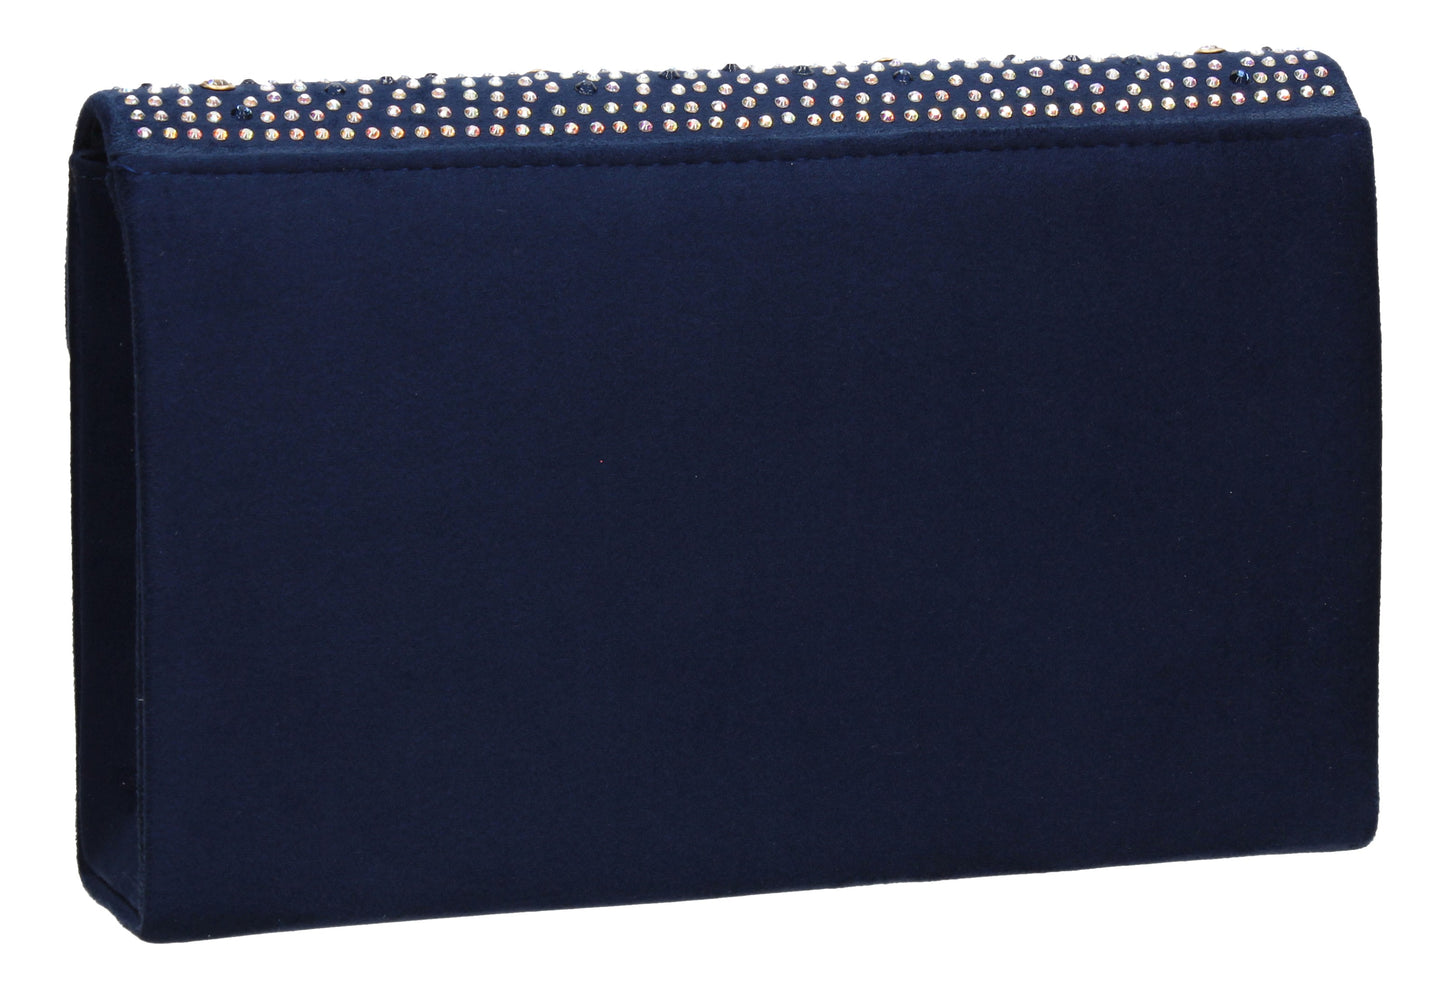 SWANKYSWANS Laurel Clutch Bag Navy Blue Cute Cheap Clutch Bag For Weddings School and Work